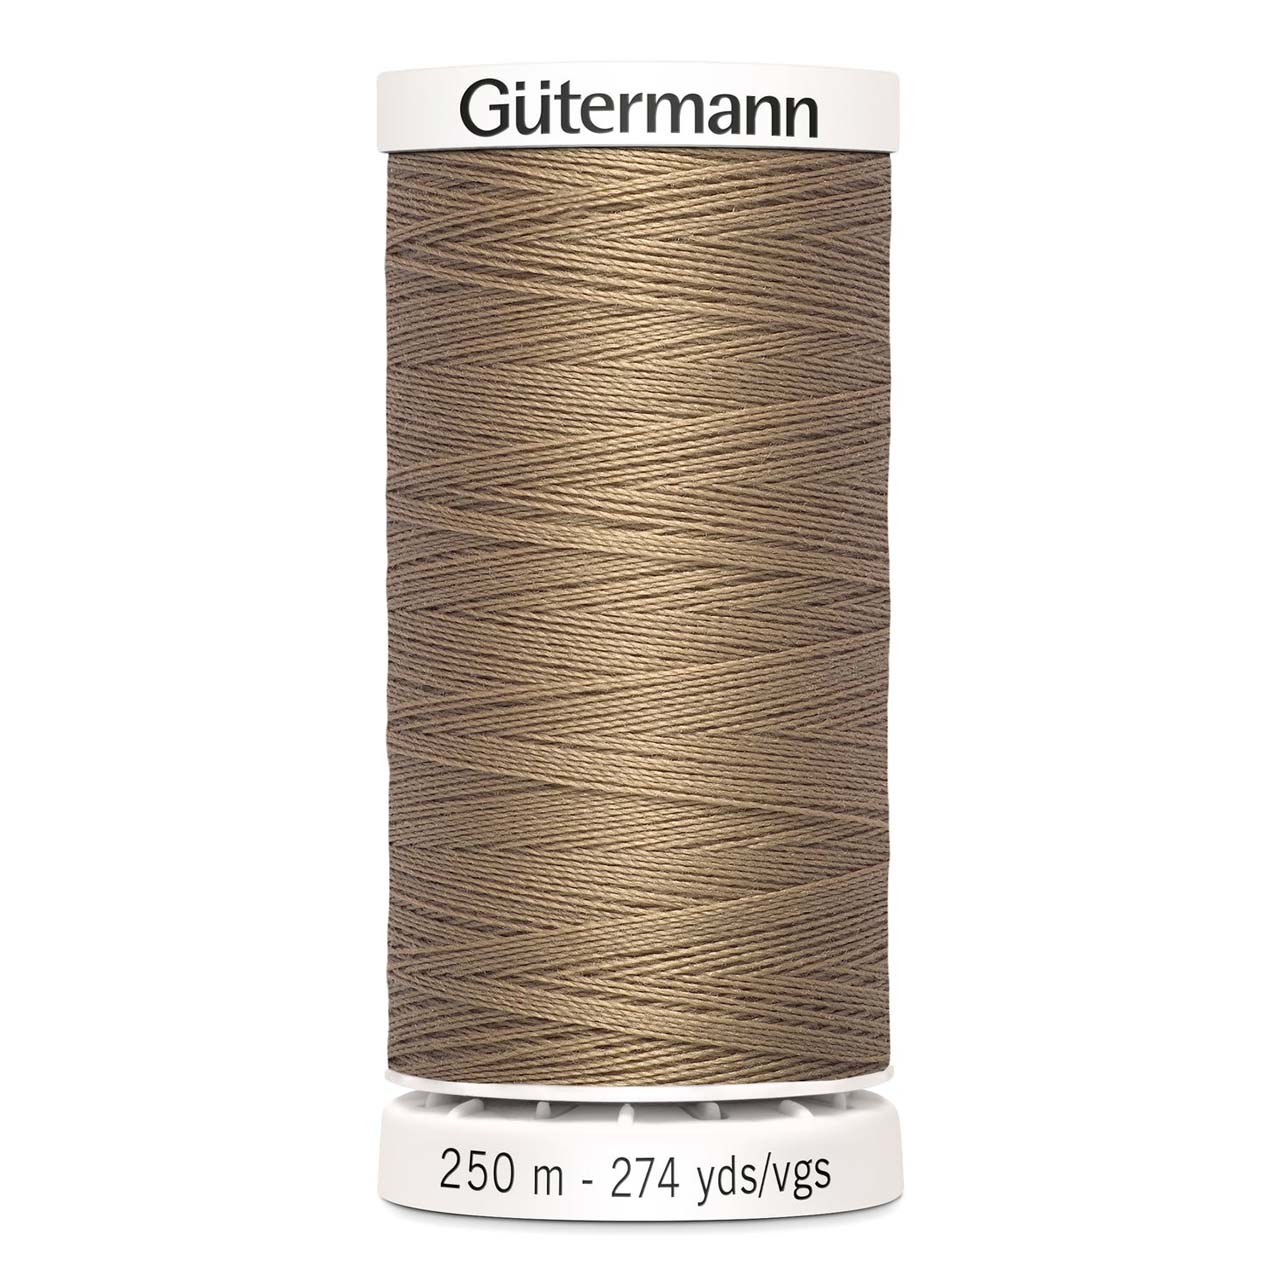 Gutermann thread 139 sewing thread 250 metres